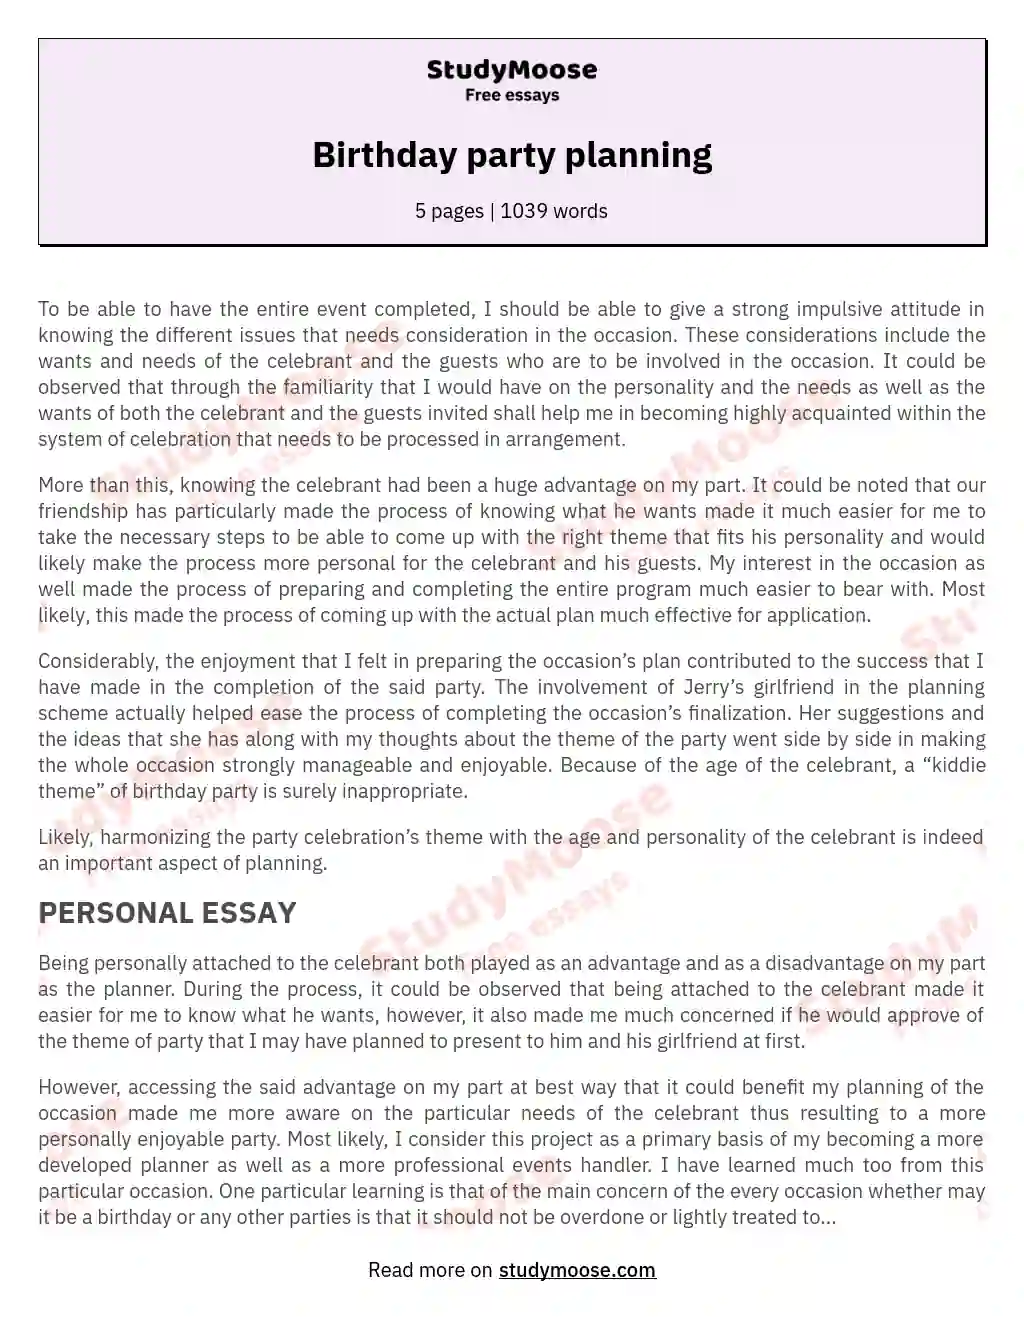 Birthday party planning essay